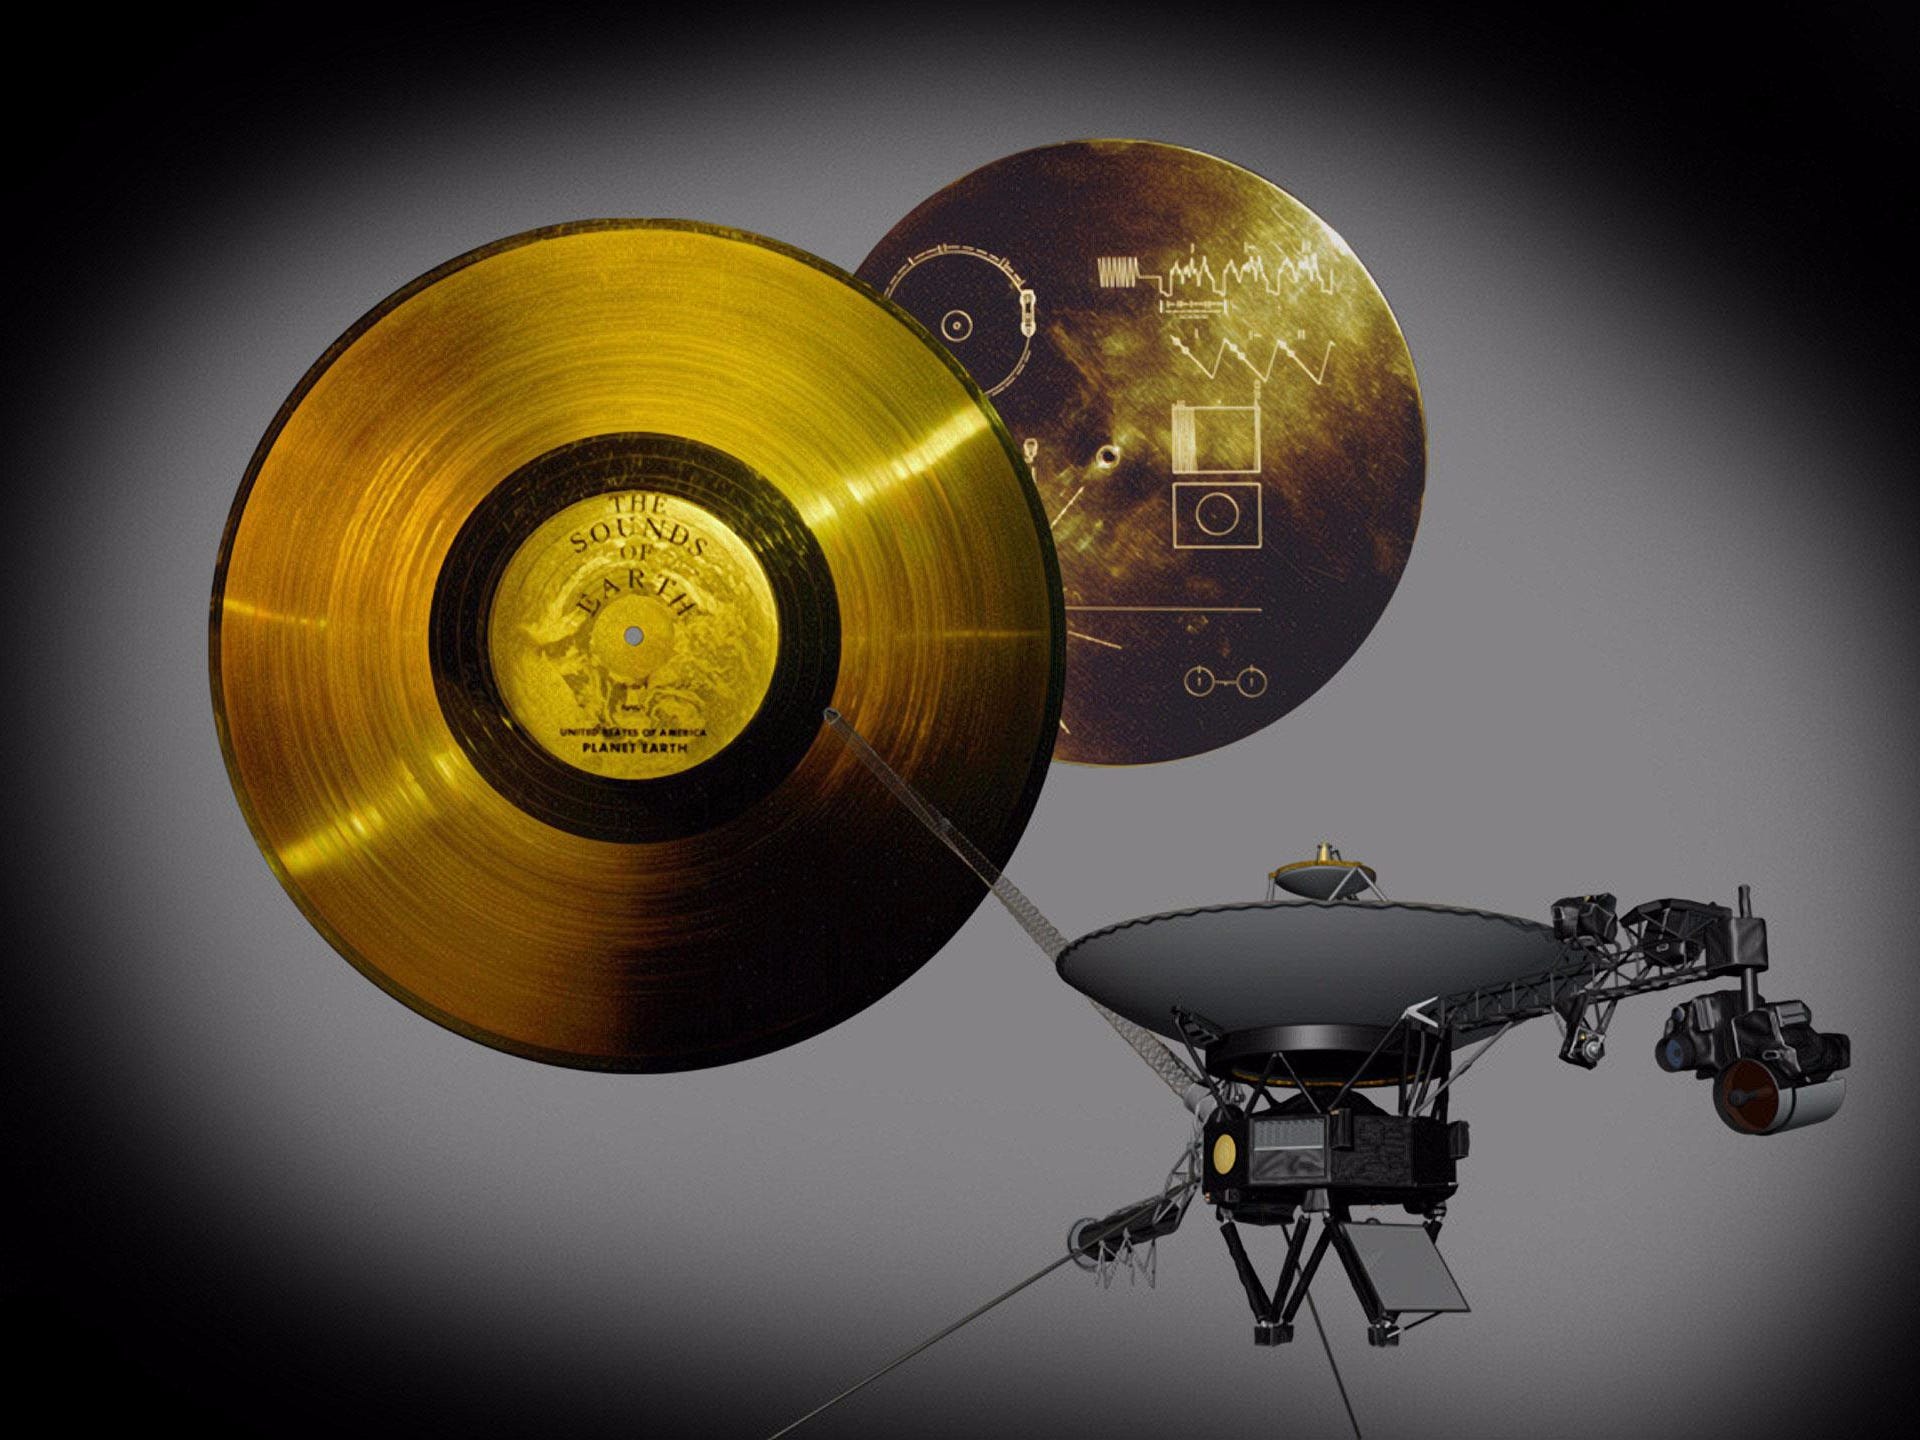 Voyager-Raumschiffsonde Golden Records NASA JPL 540489main_pia14113 full_full